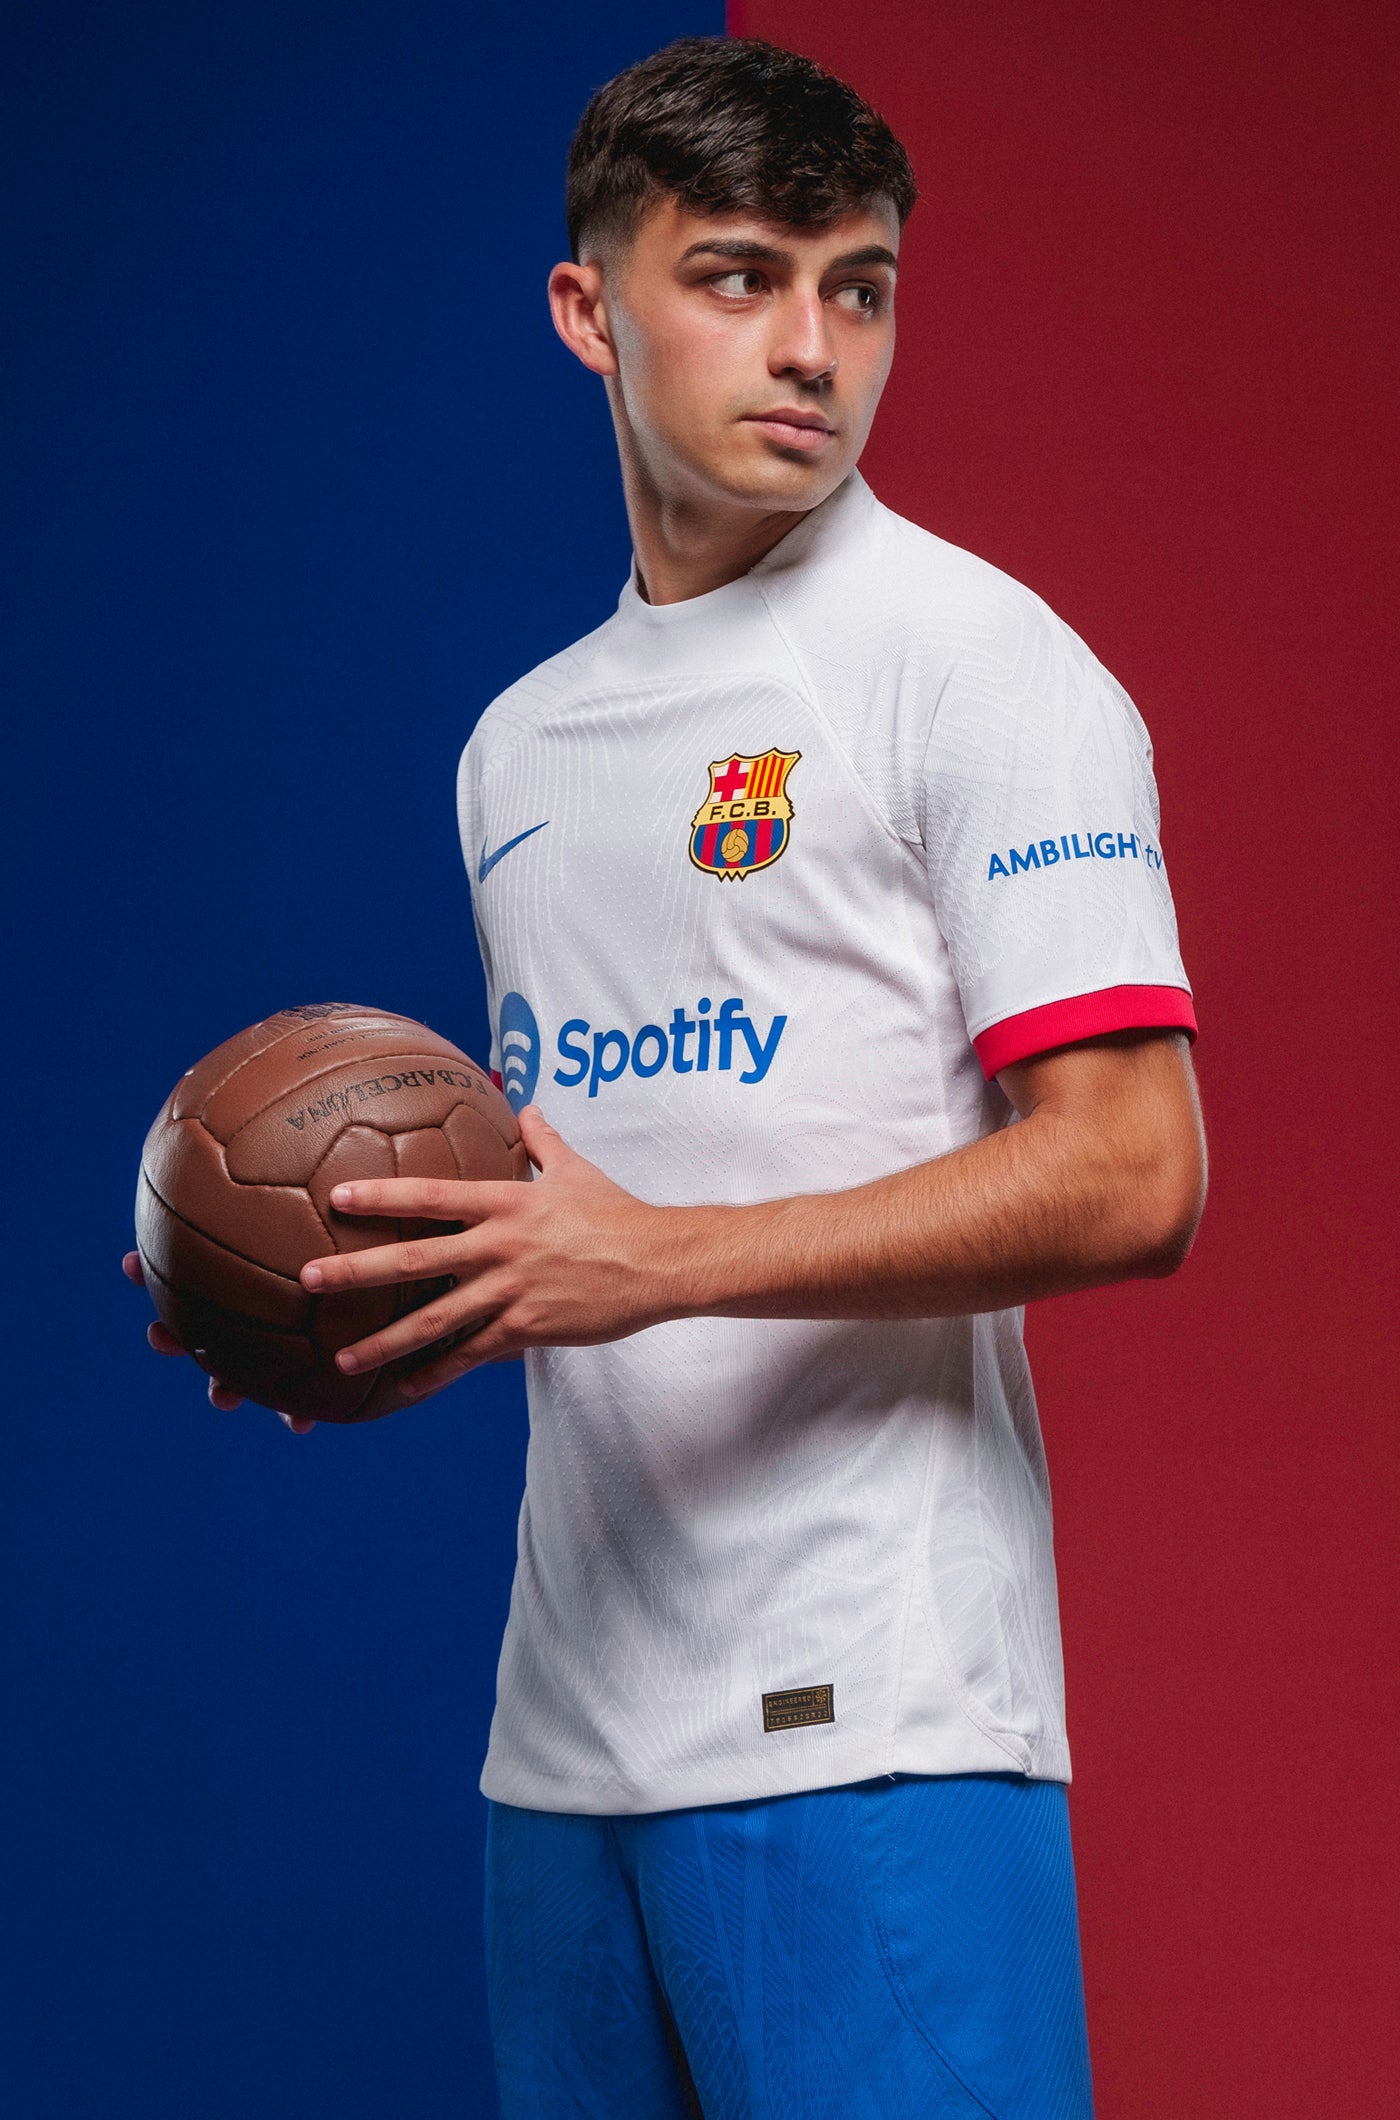 LFP FC Barcelona away shirt 23/24 Player’s Edition  - PEDRI